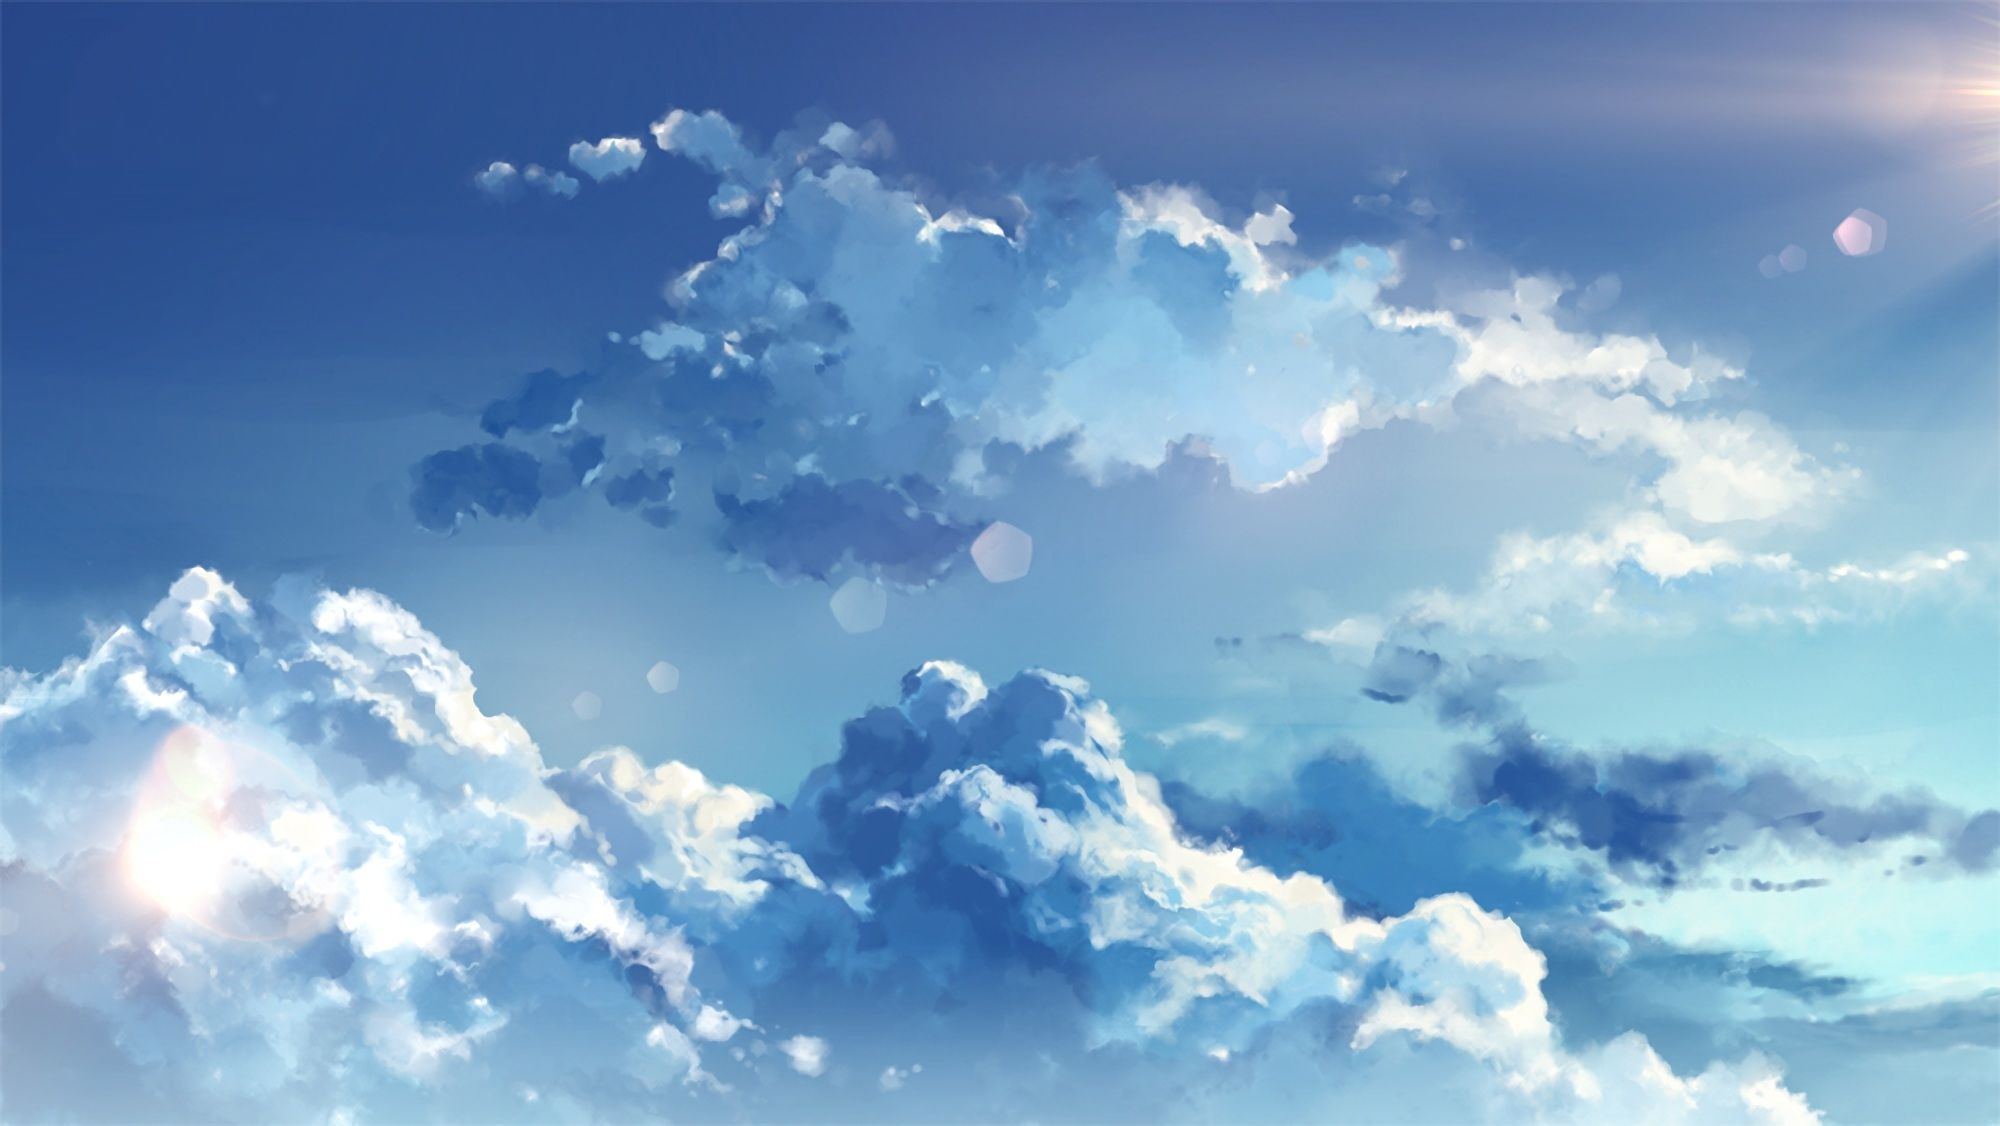 10,119 Cloud Anime Images, Stock Photos & Vectors | Shutterstock